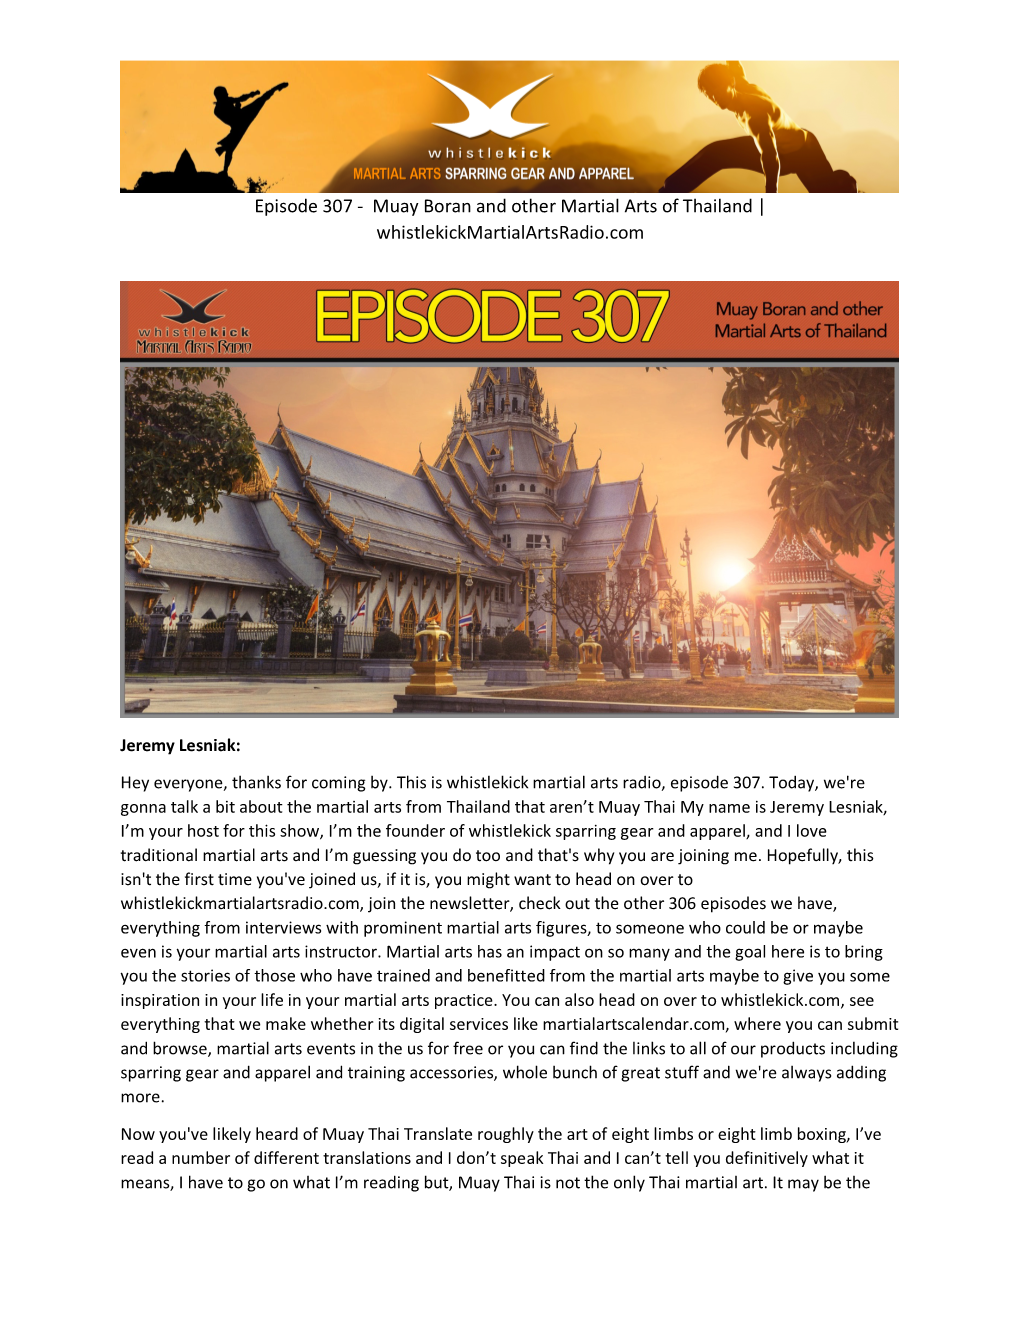 Episode 307 - Muay Boran and Other Martial Arts of Thailand | Whistlekickmartialartsradio.Com